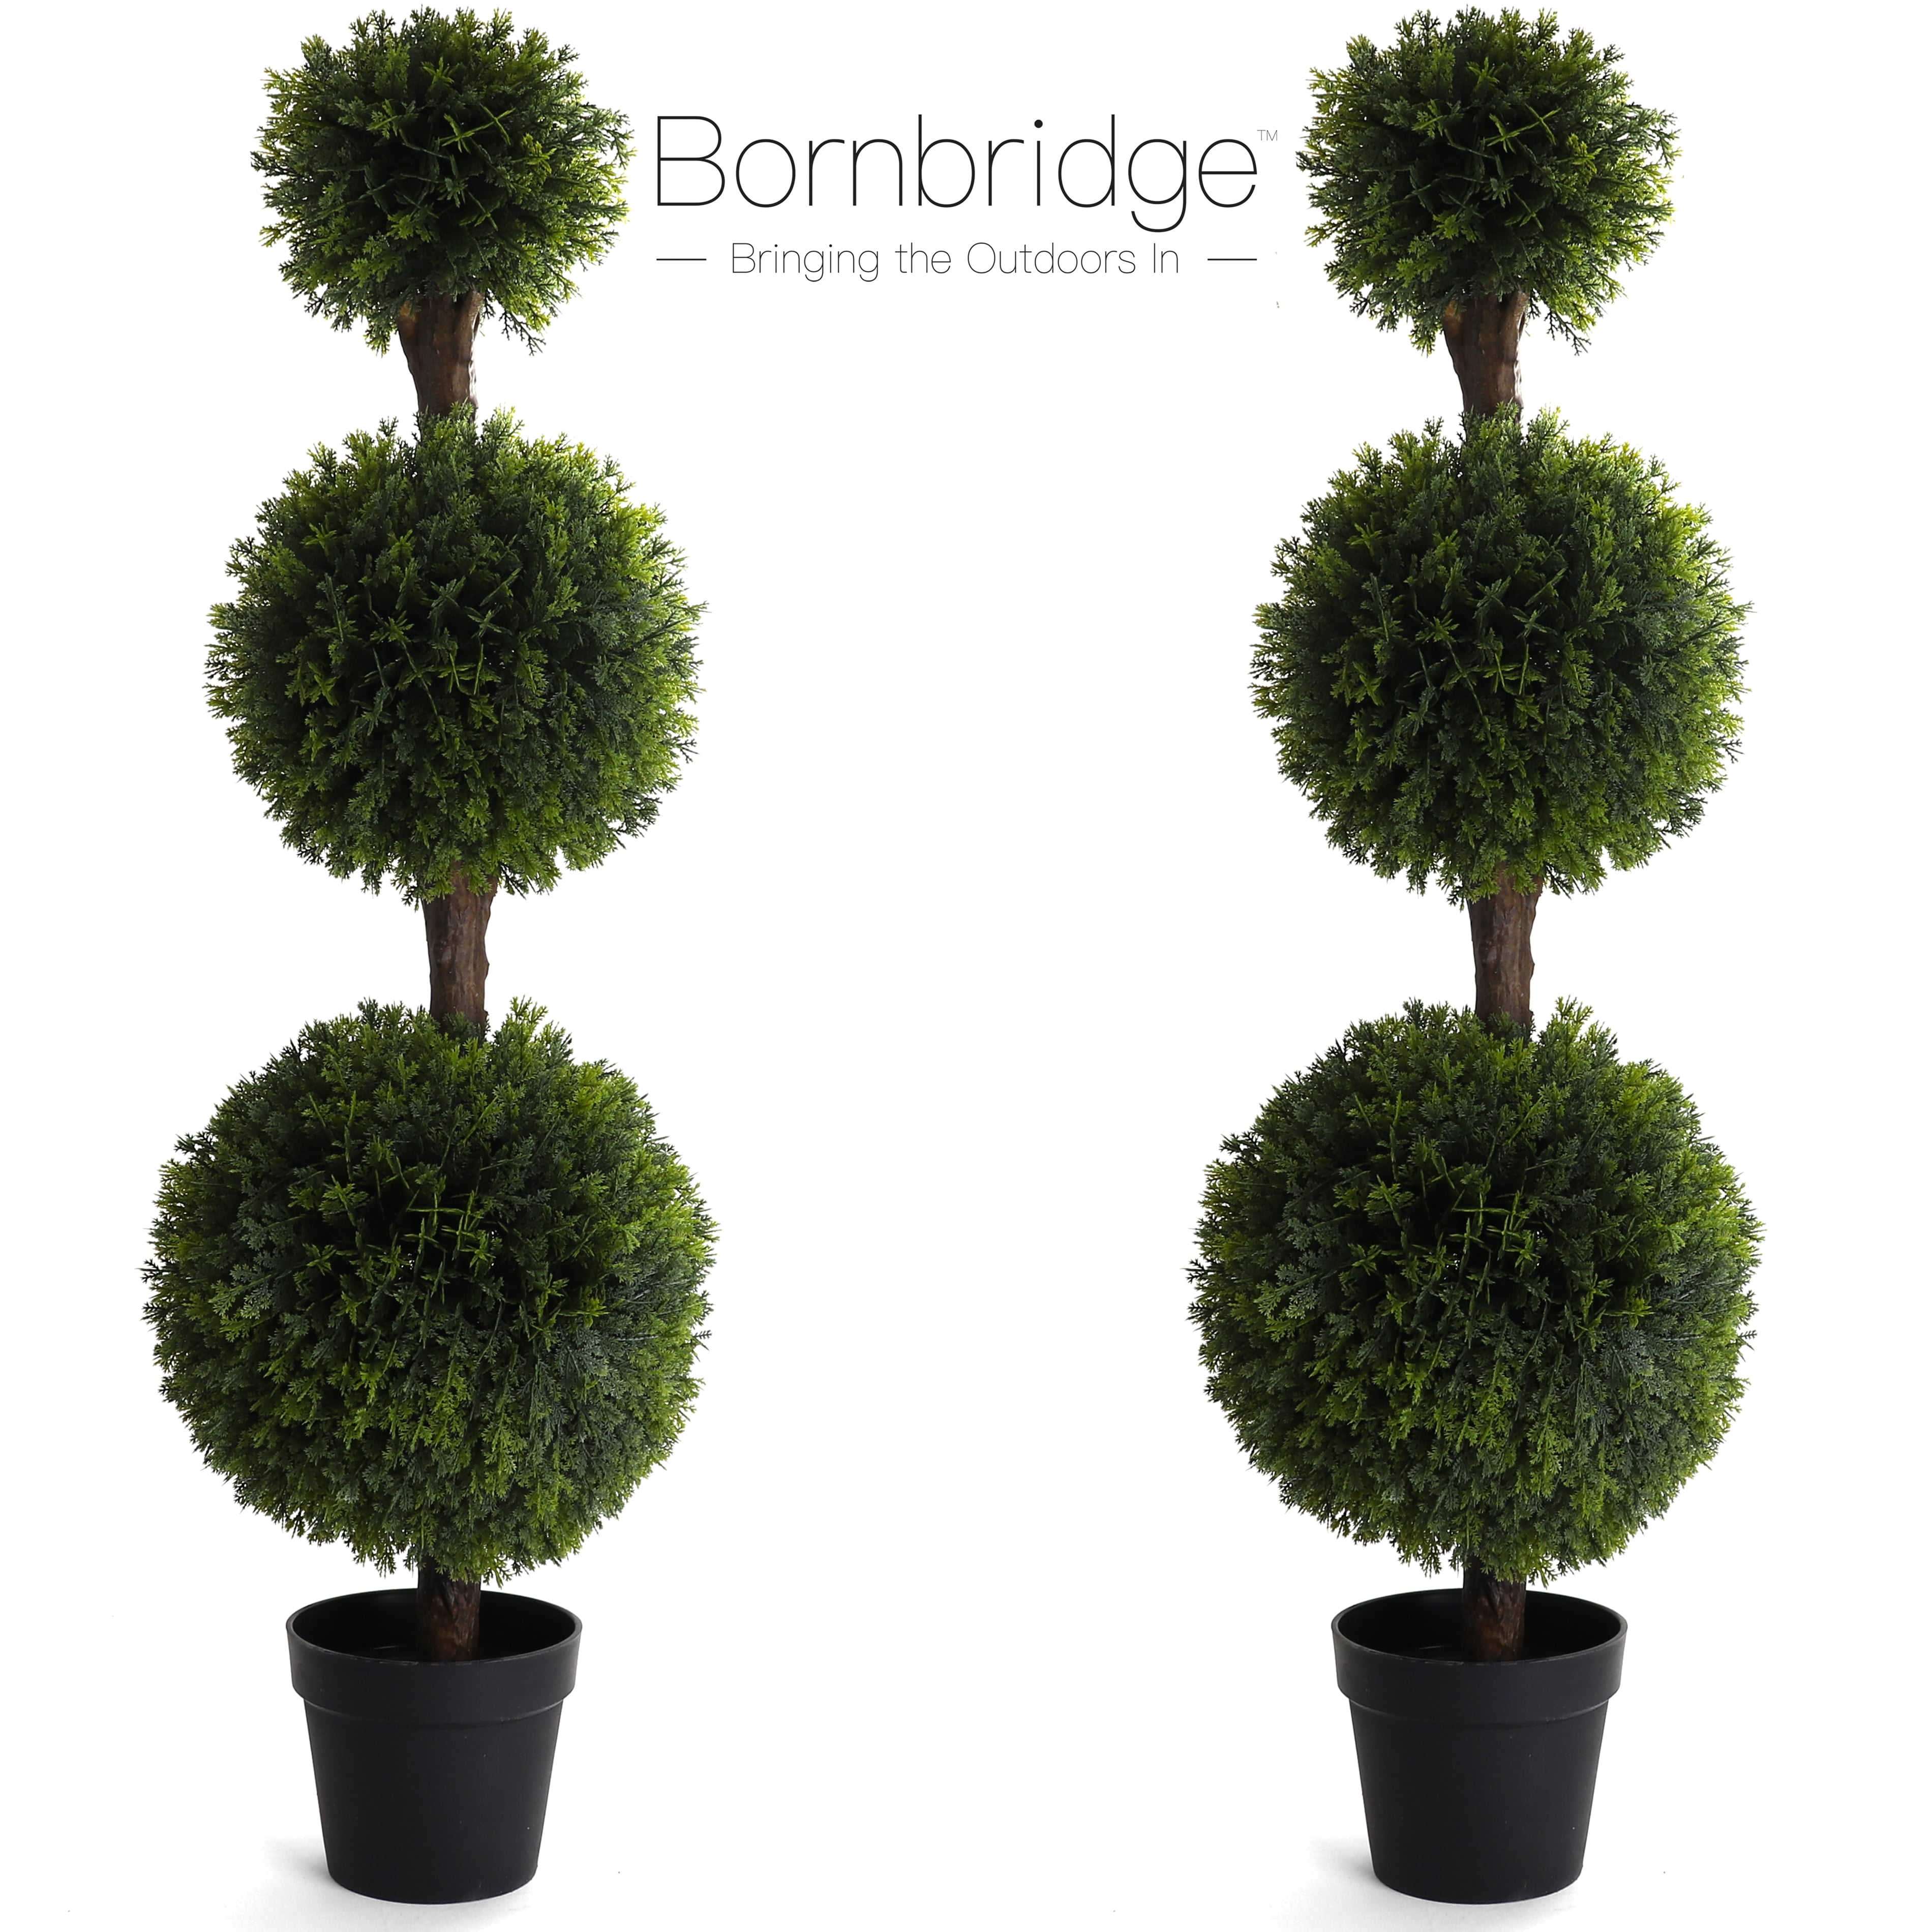 bornbridge artificial cypress topiary ball tree - 4' cypress ball tree -  indoor/outdoor topiary trees - artificial outdoor plants - lifelike cypress